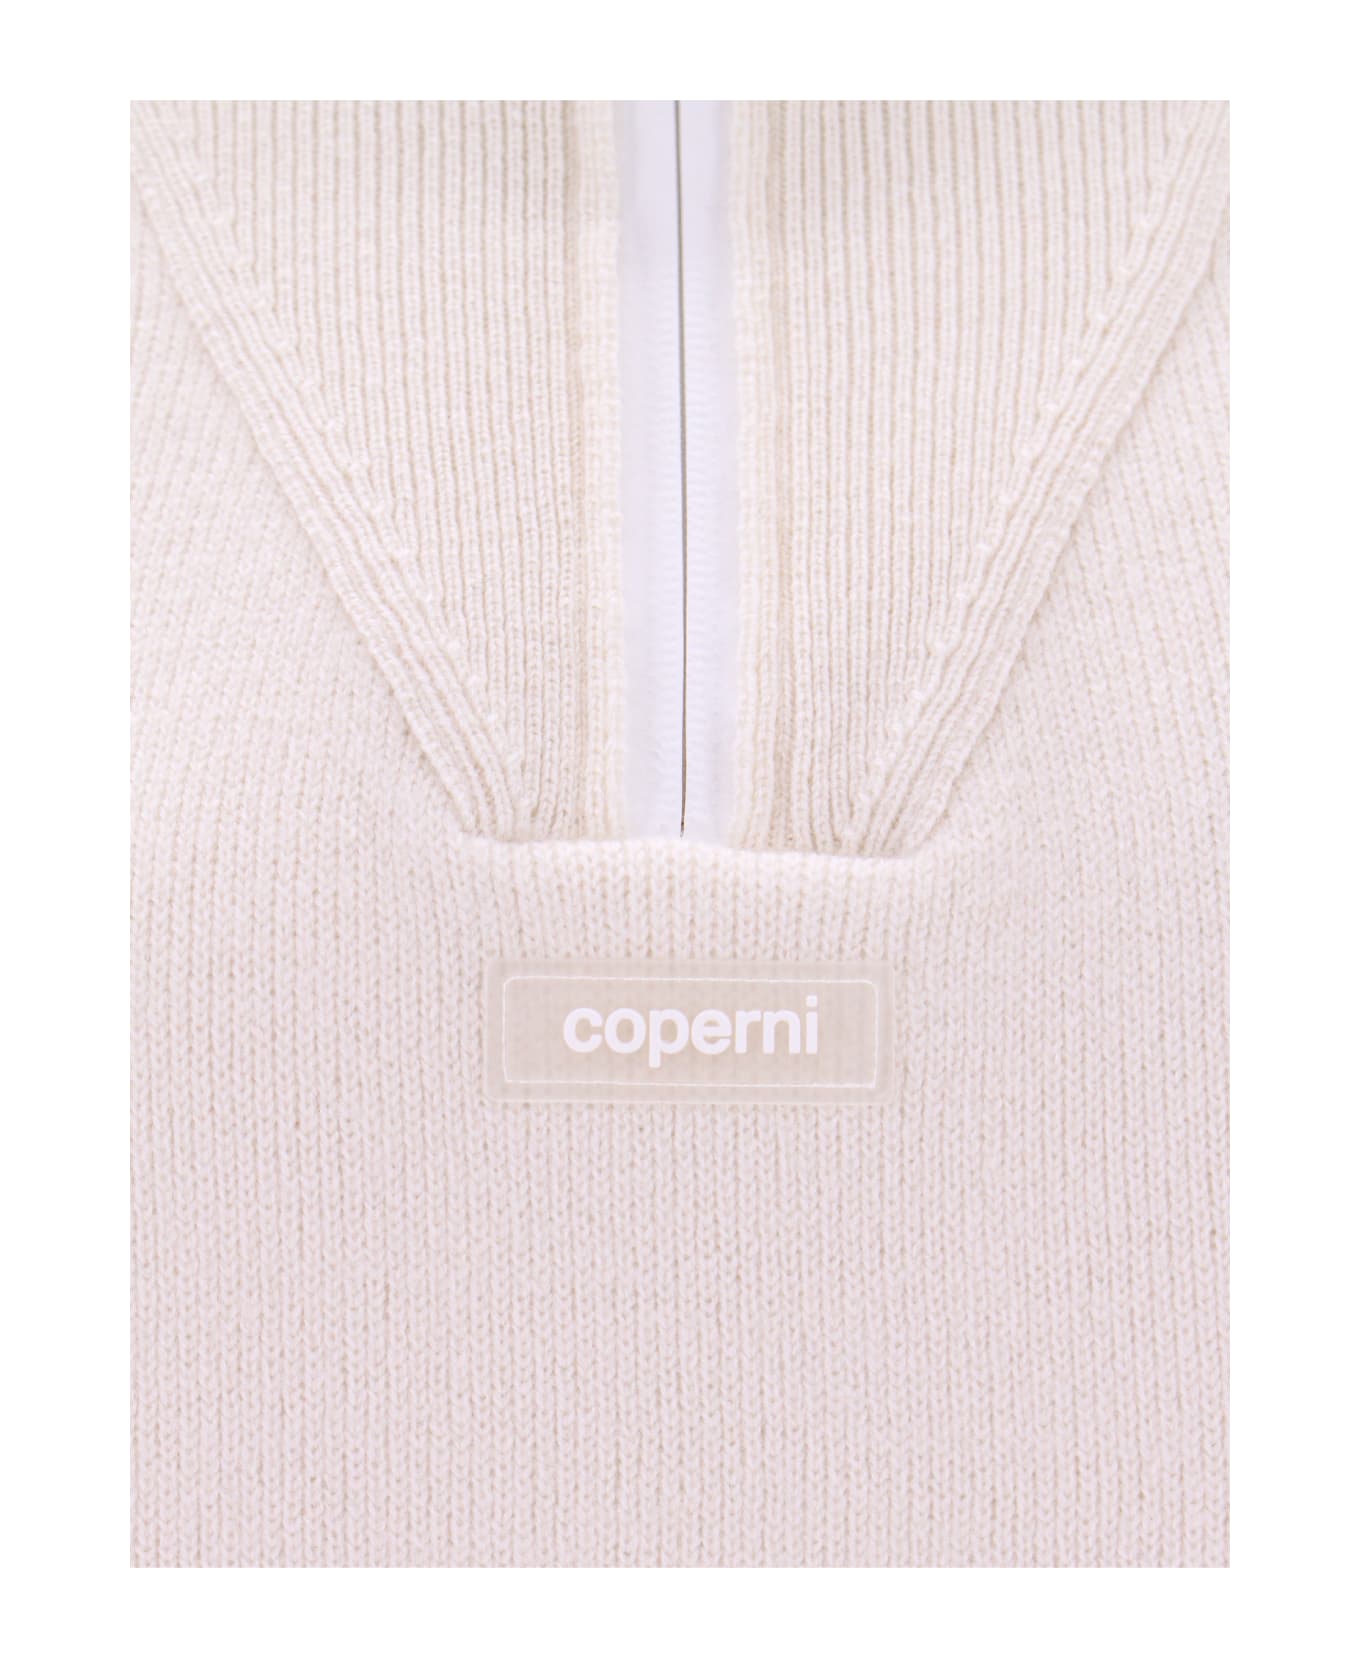 Coperni Sweater Sweater - White